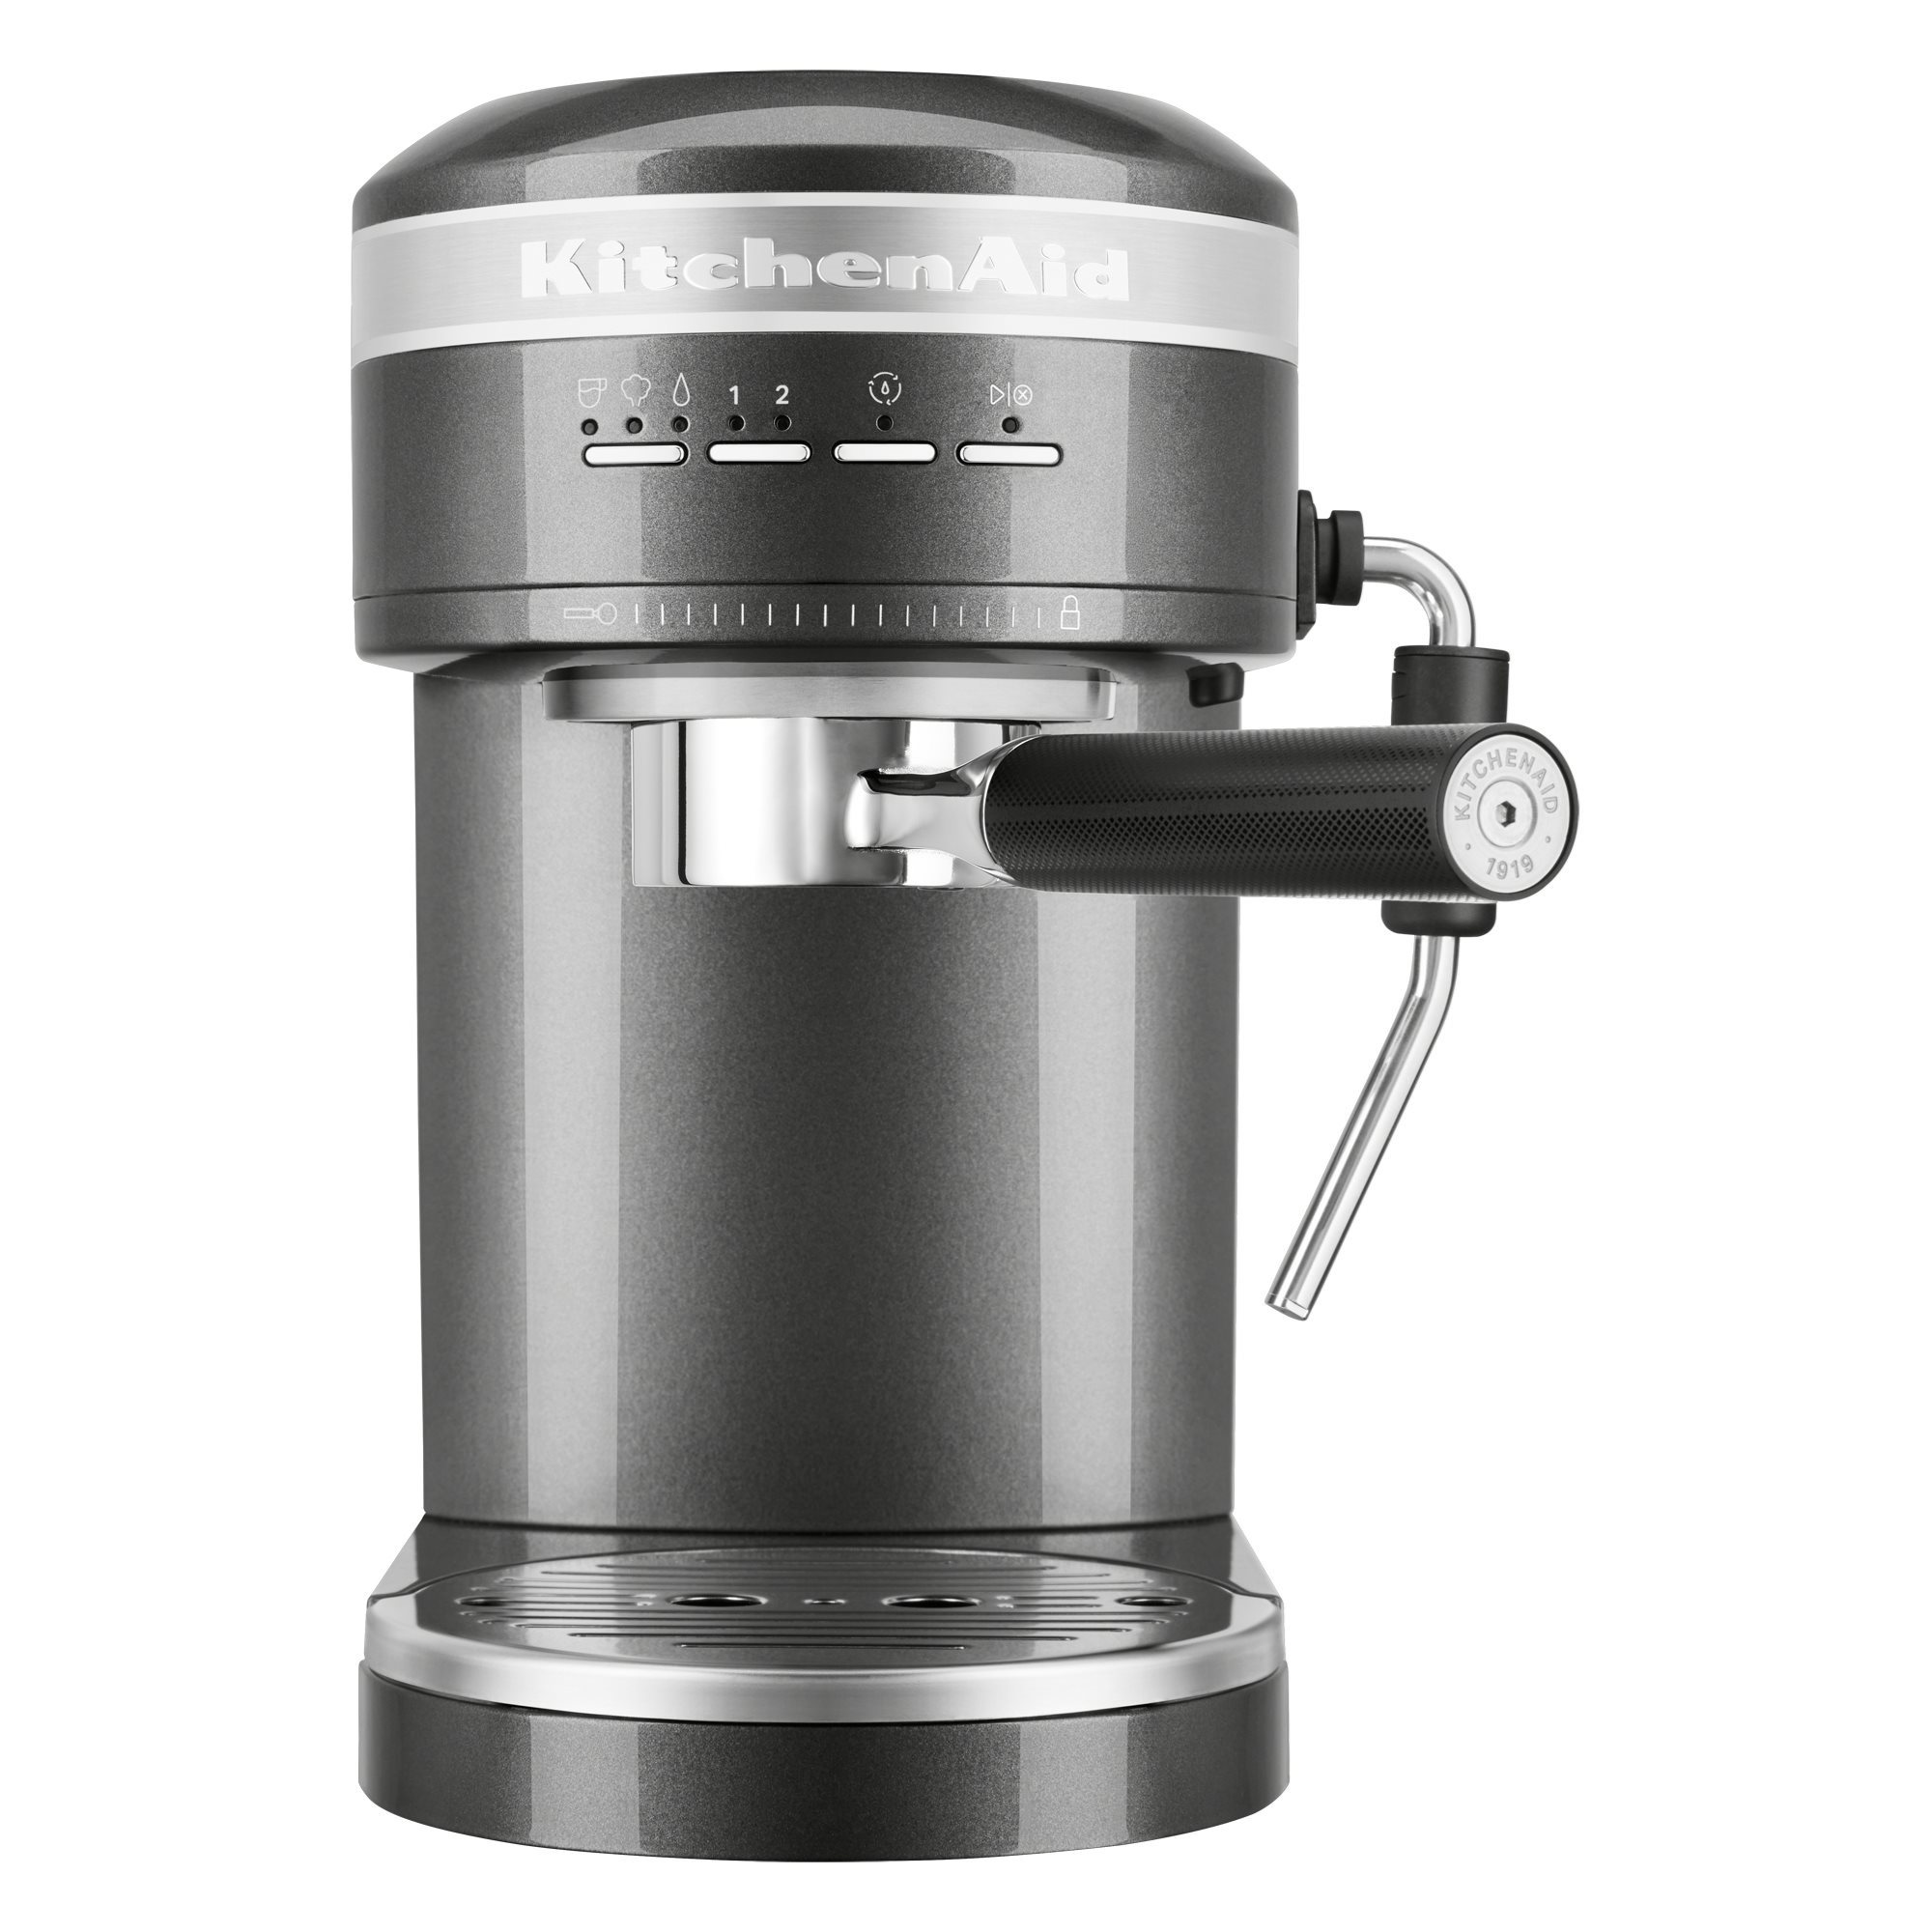 Artisan electric espresso machine, 1470W, Charcoal Gray color